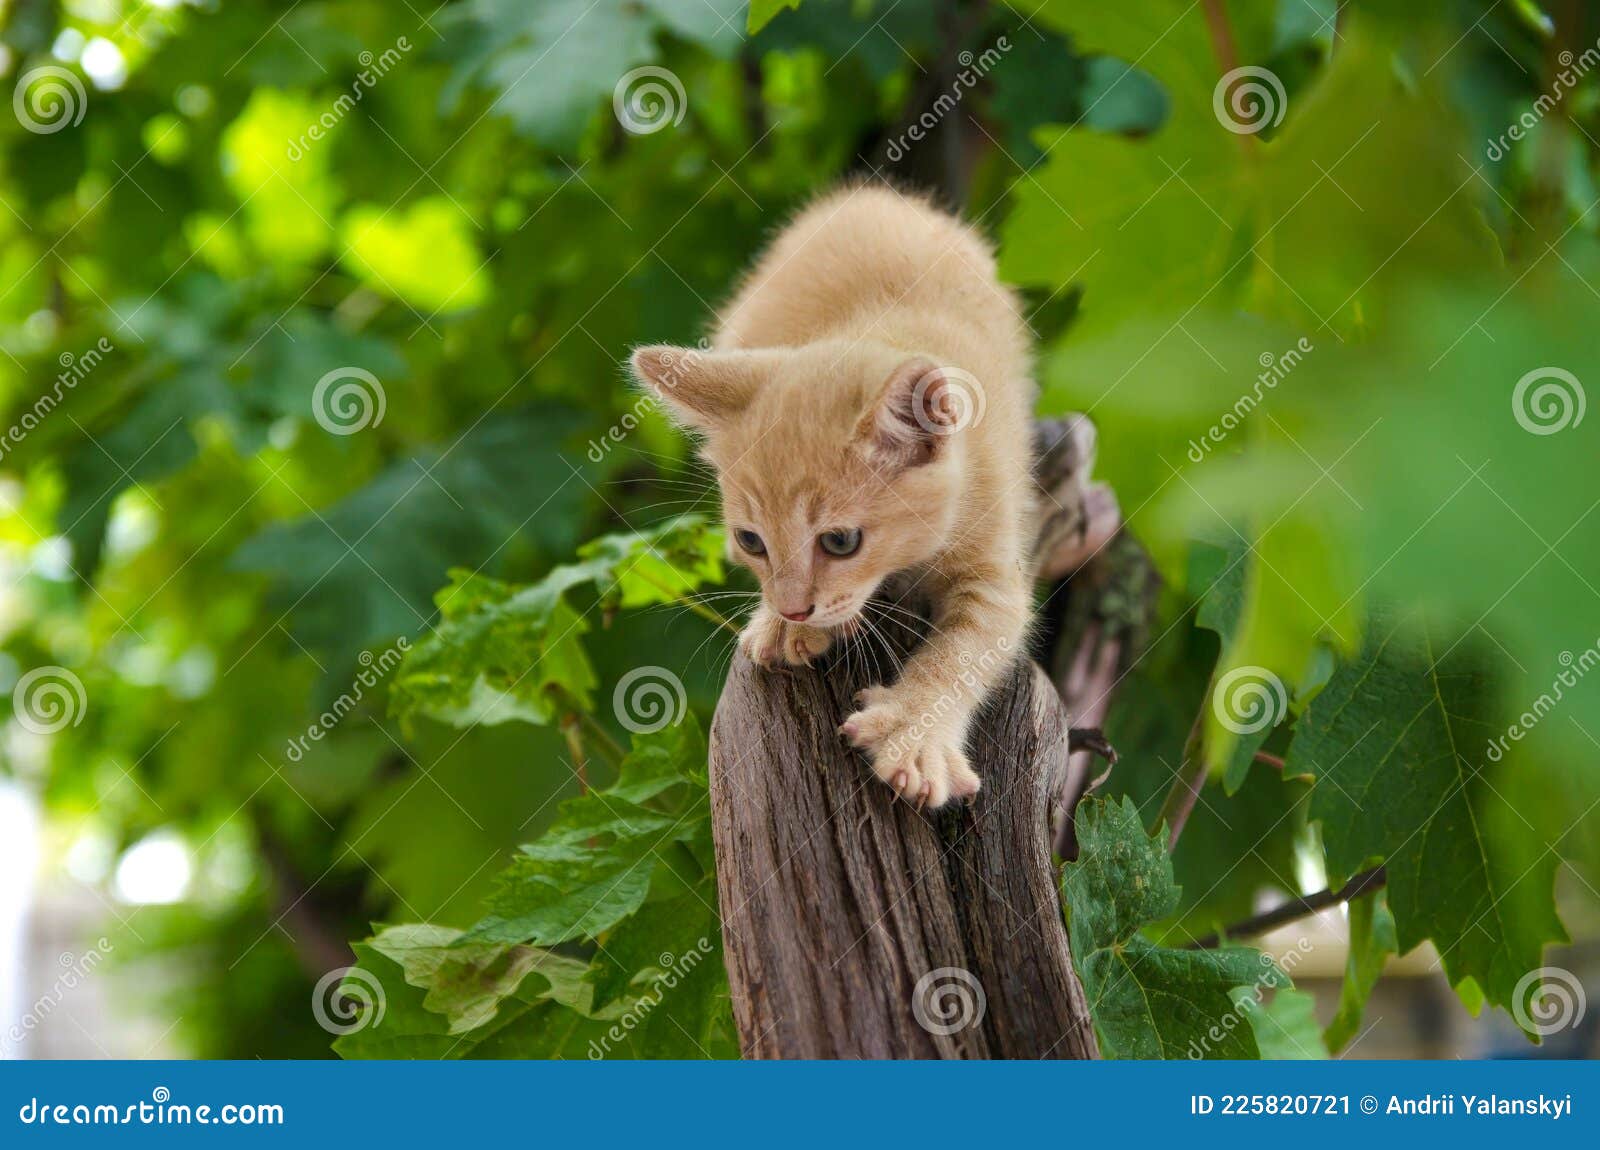 ginger kitten on the hunt. frisky kitty climbs trees. playful cat hunter. kitten is exploring a new world for him. delight